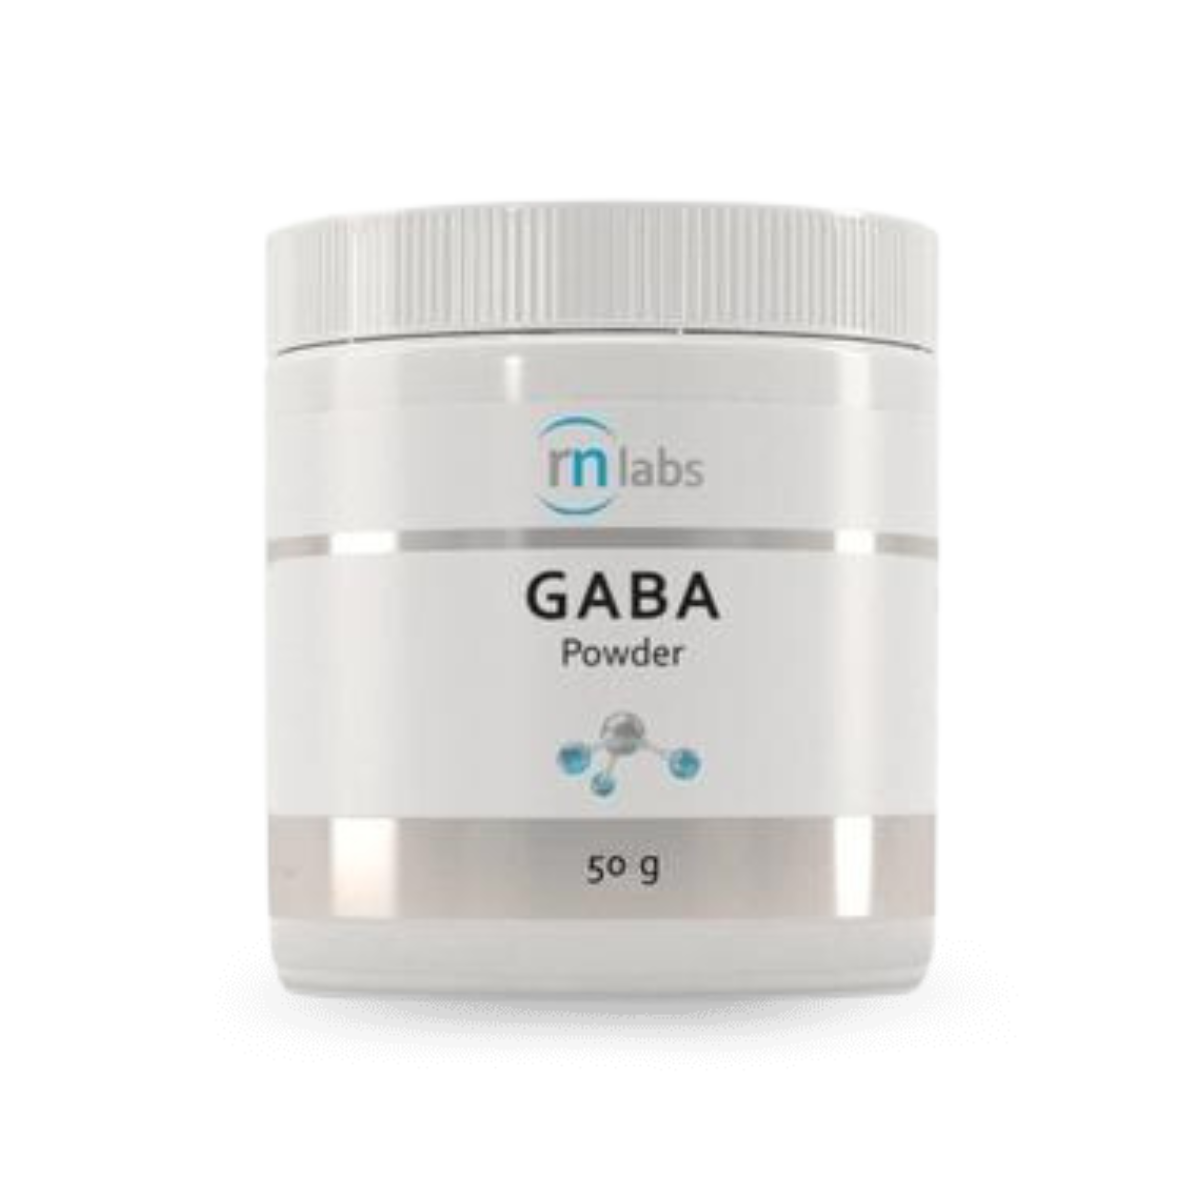 RN Labs GABA Powder 50g